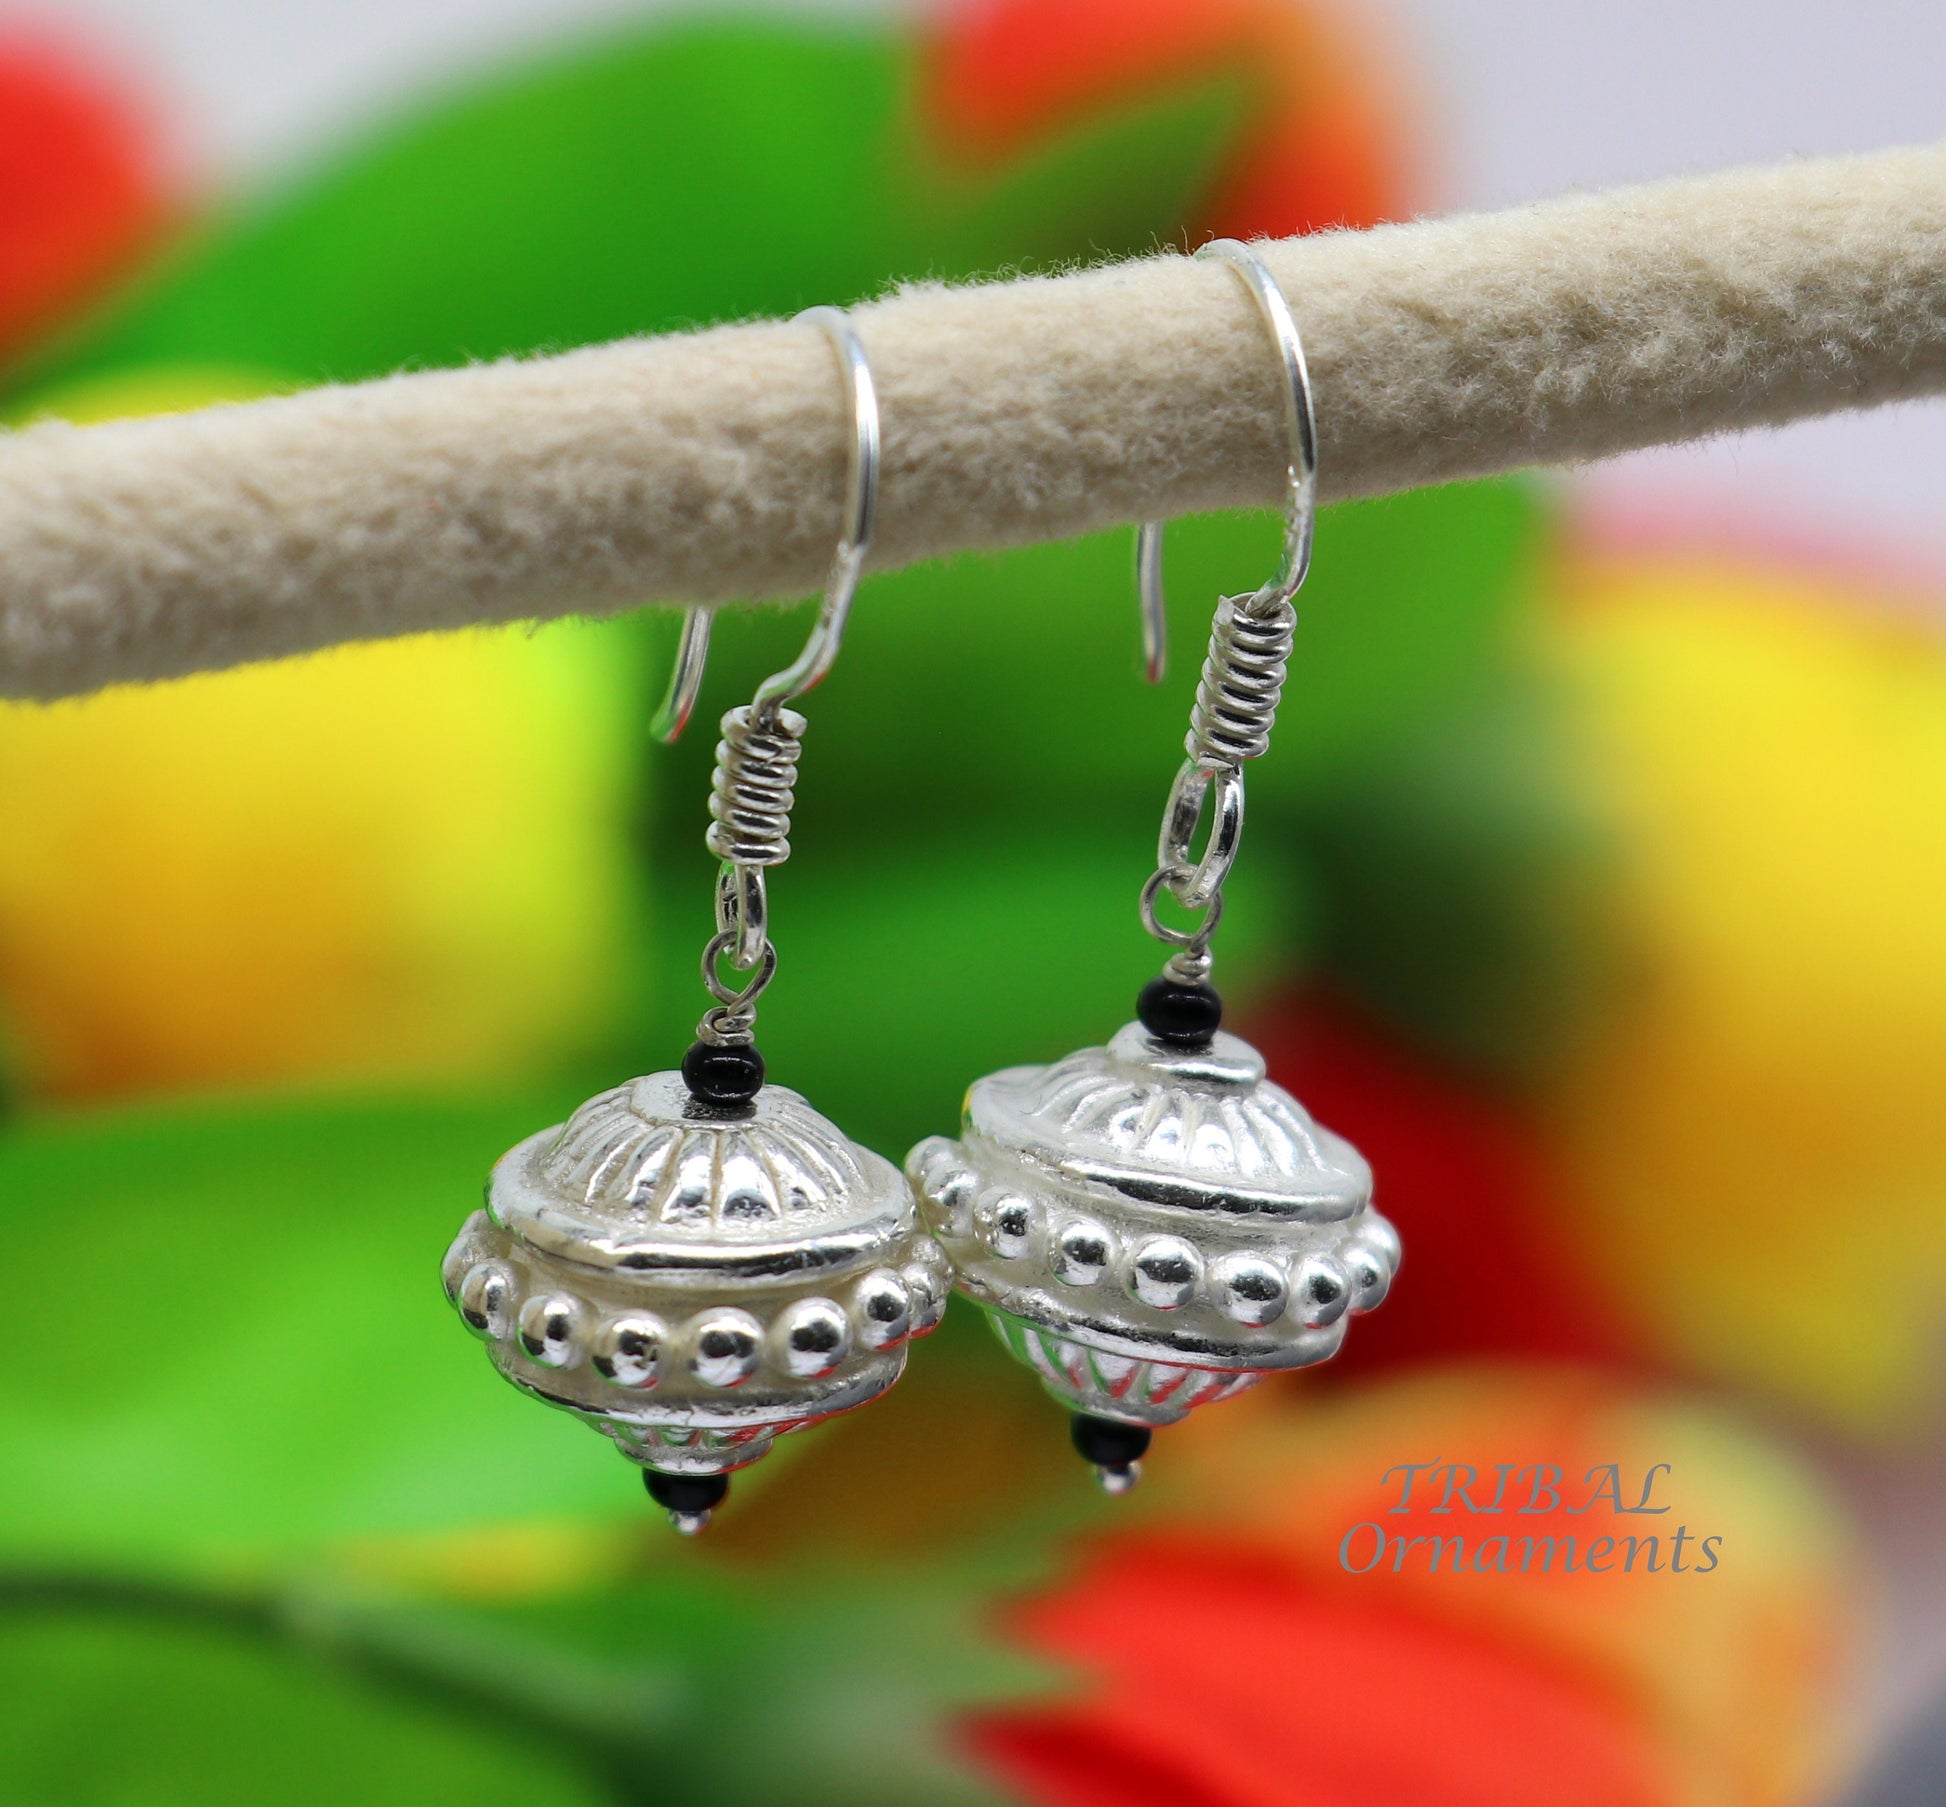 925 sterling silver hamdmade hook earrings, fabulous hanging pretty bells drop dangle earrings tribal ethnic jewelry from India s1084 - TRIBAL ORNAMENTS